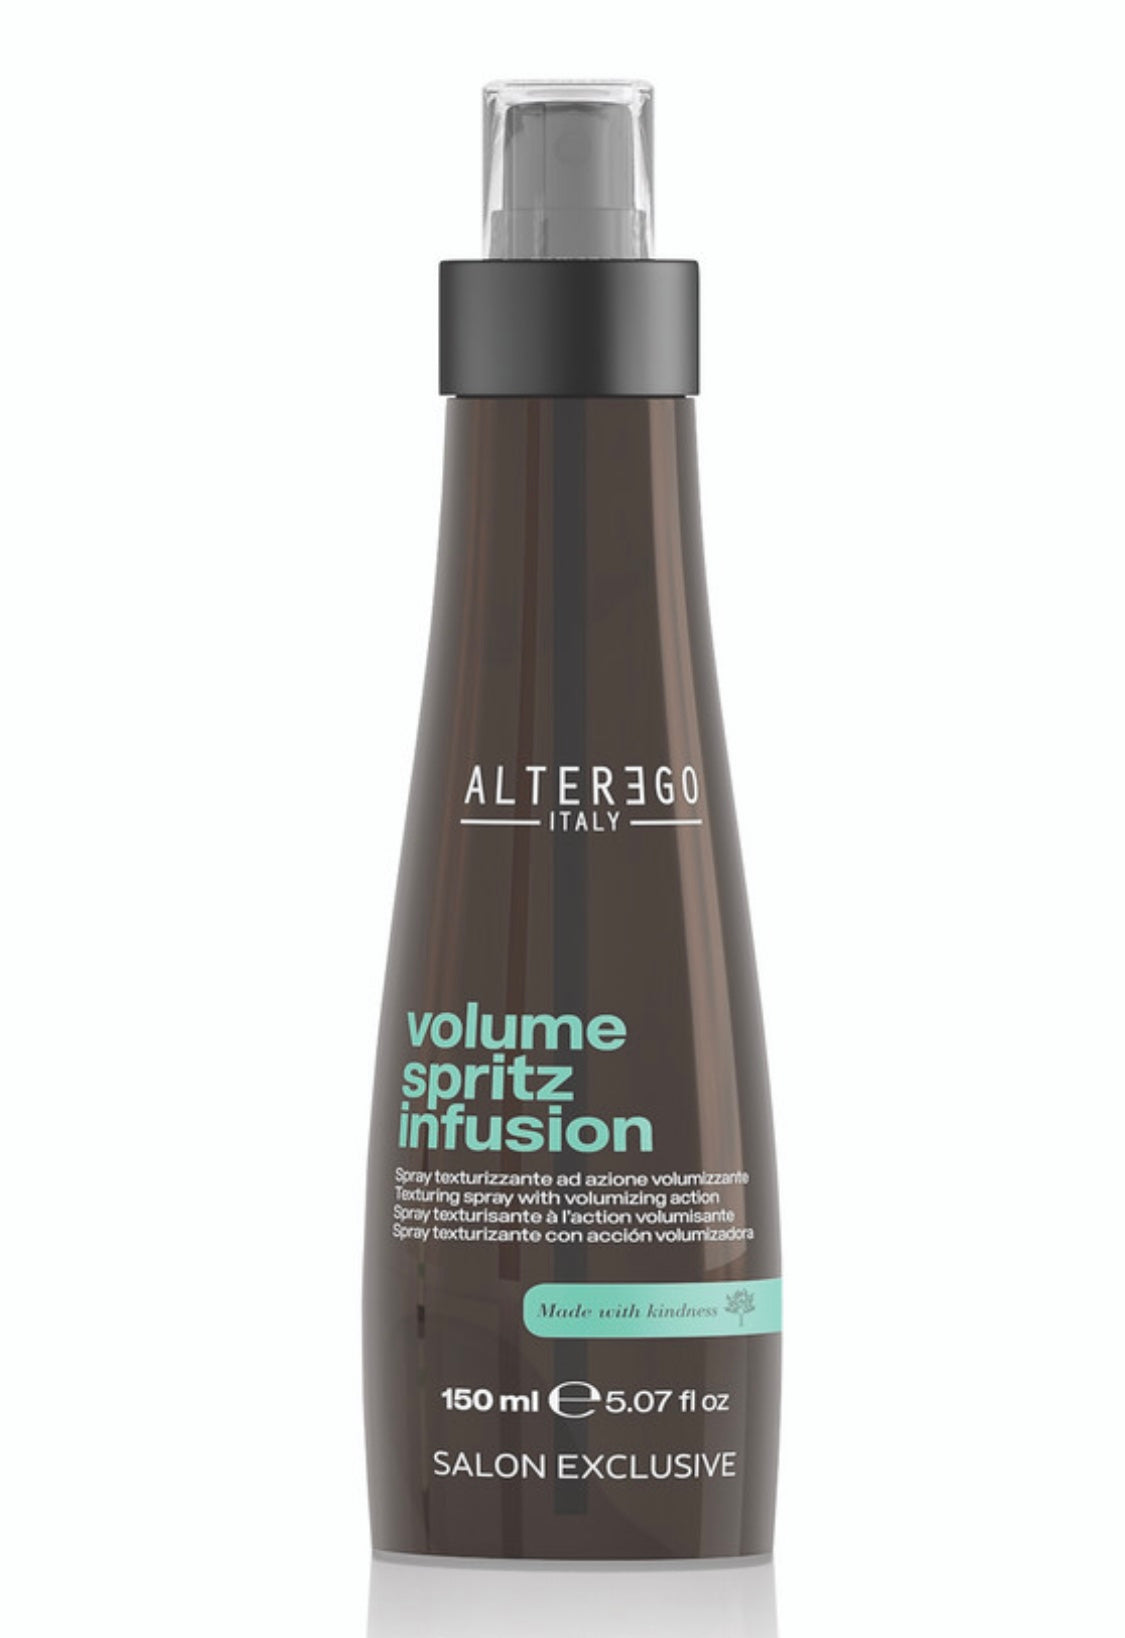 Alterego - Volume spritz infusion 5.07 fl. oz. / 150 ml